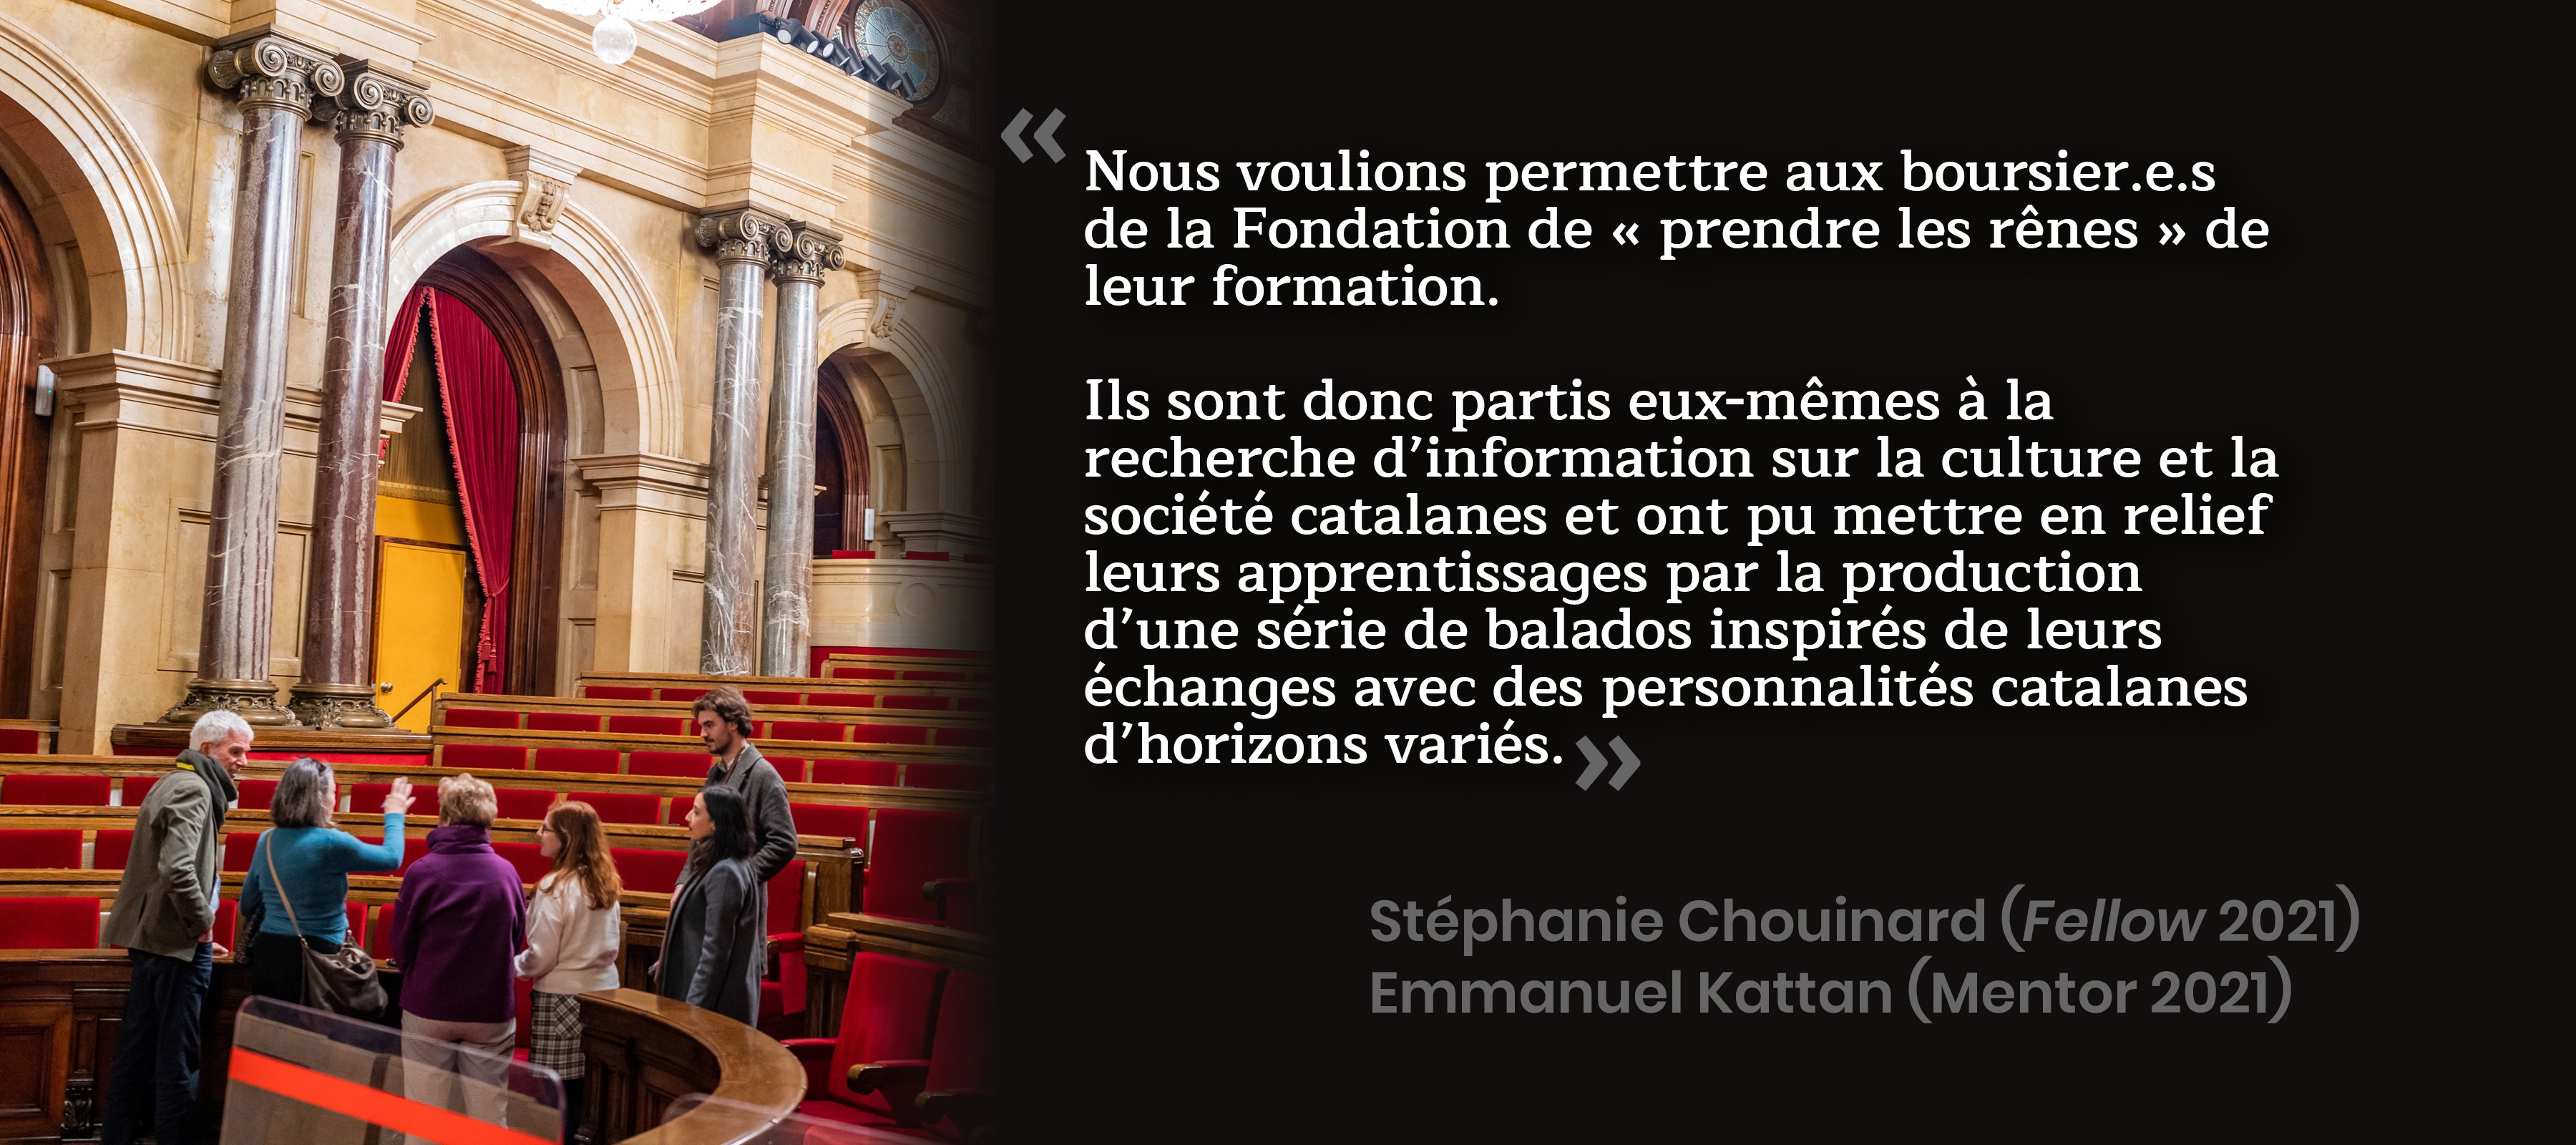 Citation_Chouinard_FR